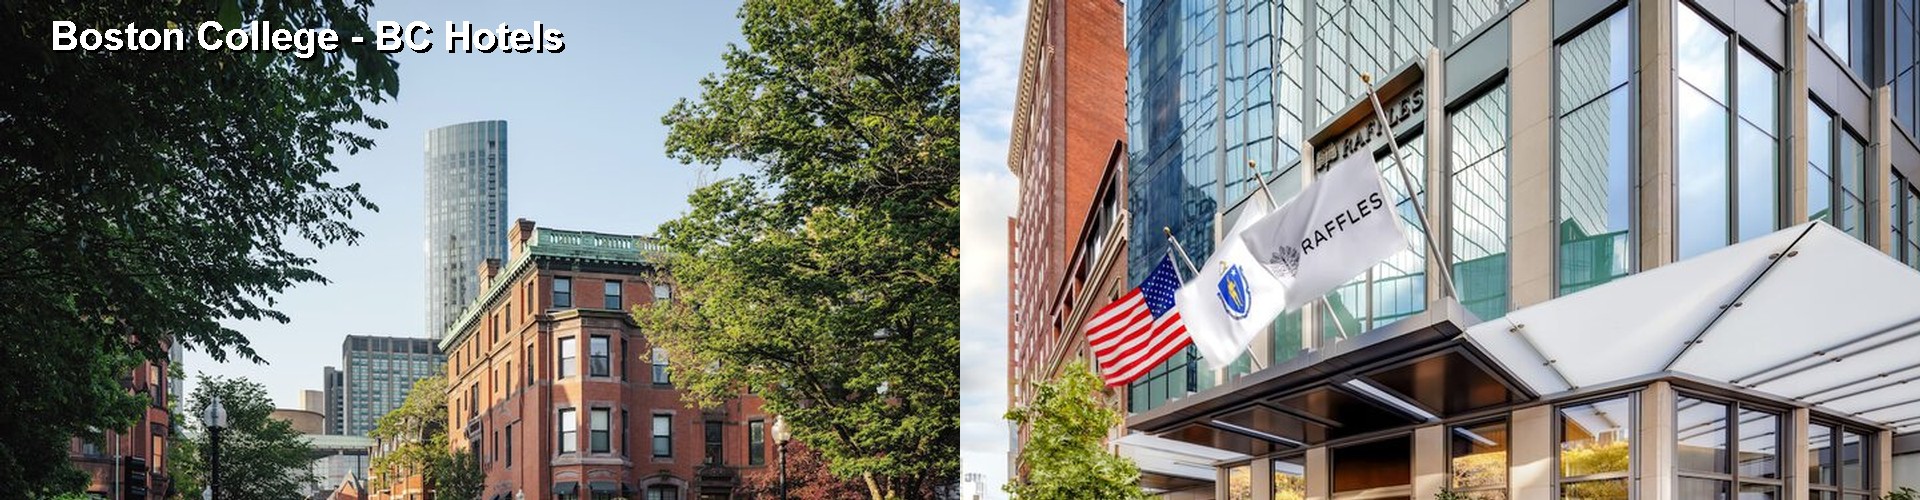 5 Best Hotels near Boston College - BC